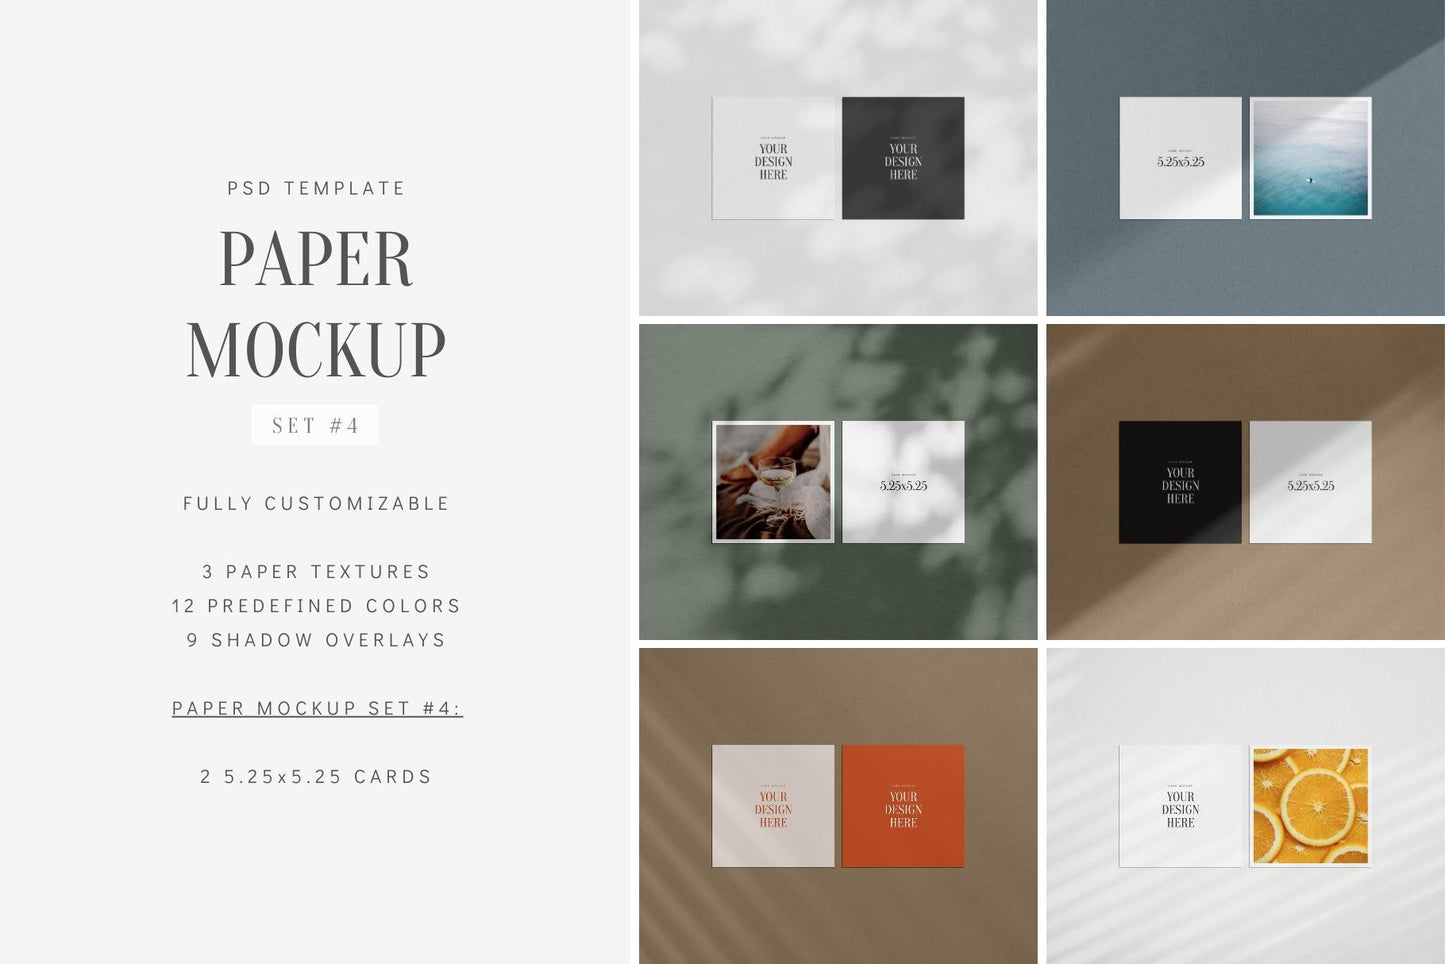 PAPER MOCKUP SET #4 | 5.25x5.25 Square Card Mockup | PSD Mockup